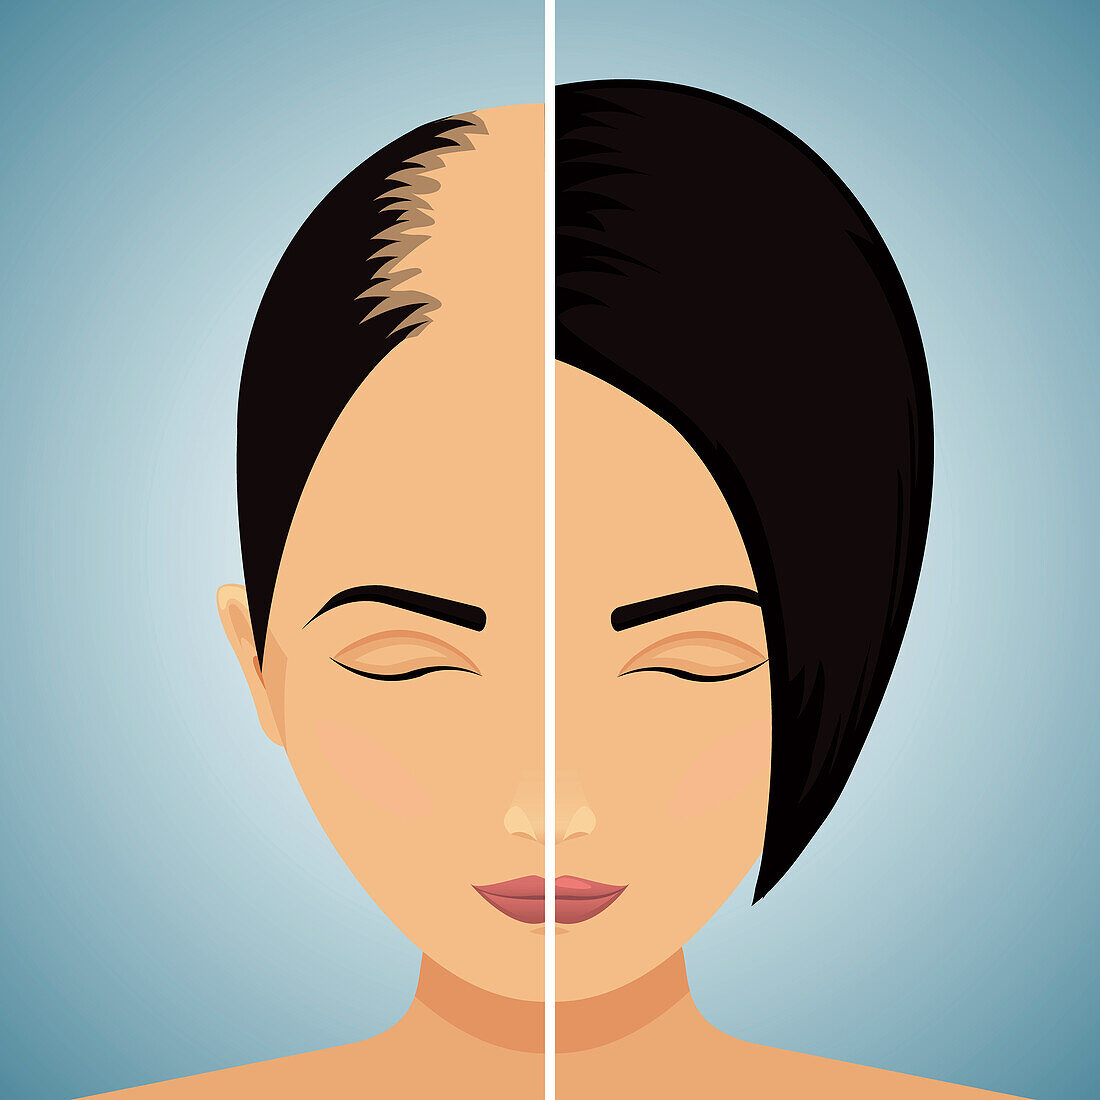 Hair loss in women, conceptual illustration